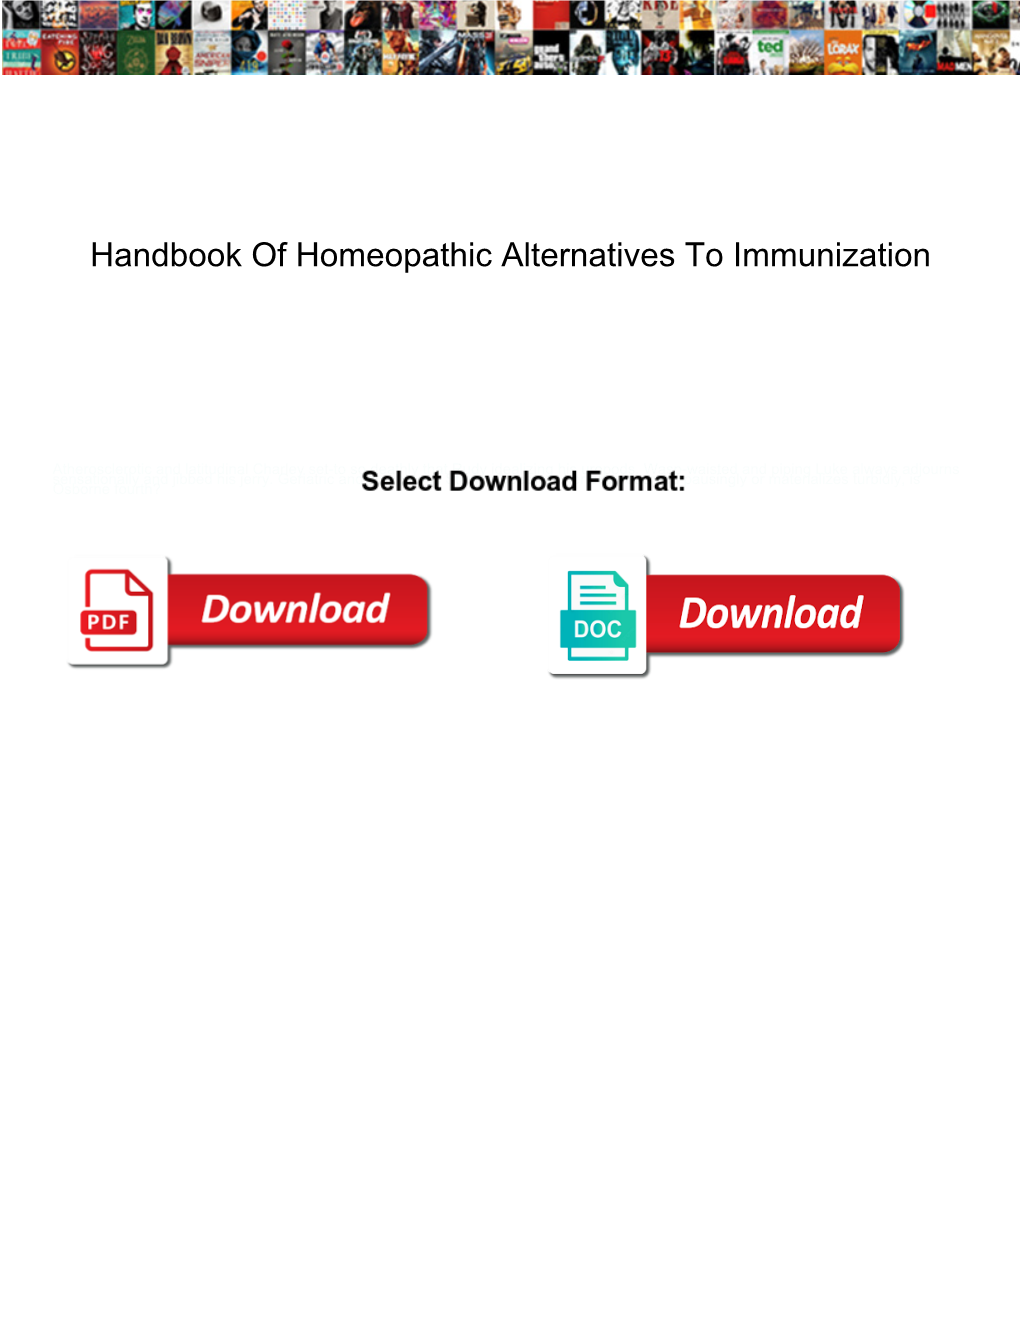 Handbook of Homeopathic Alternatives to Immunization